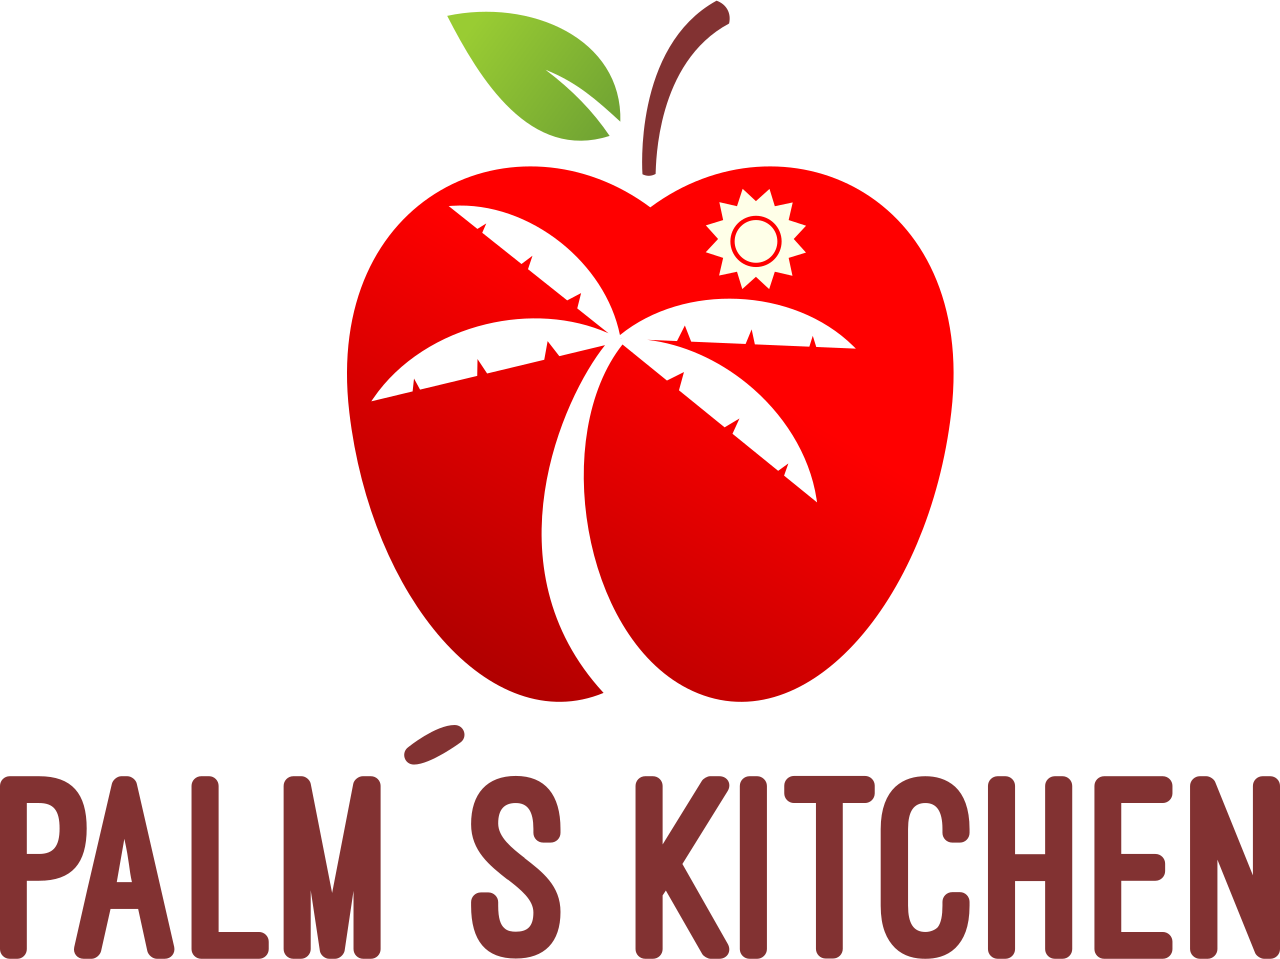 Palm´s Kitchen's web page